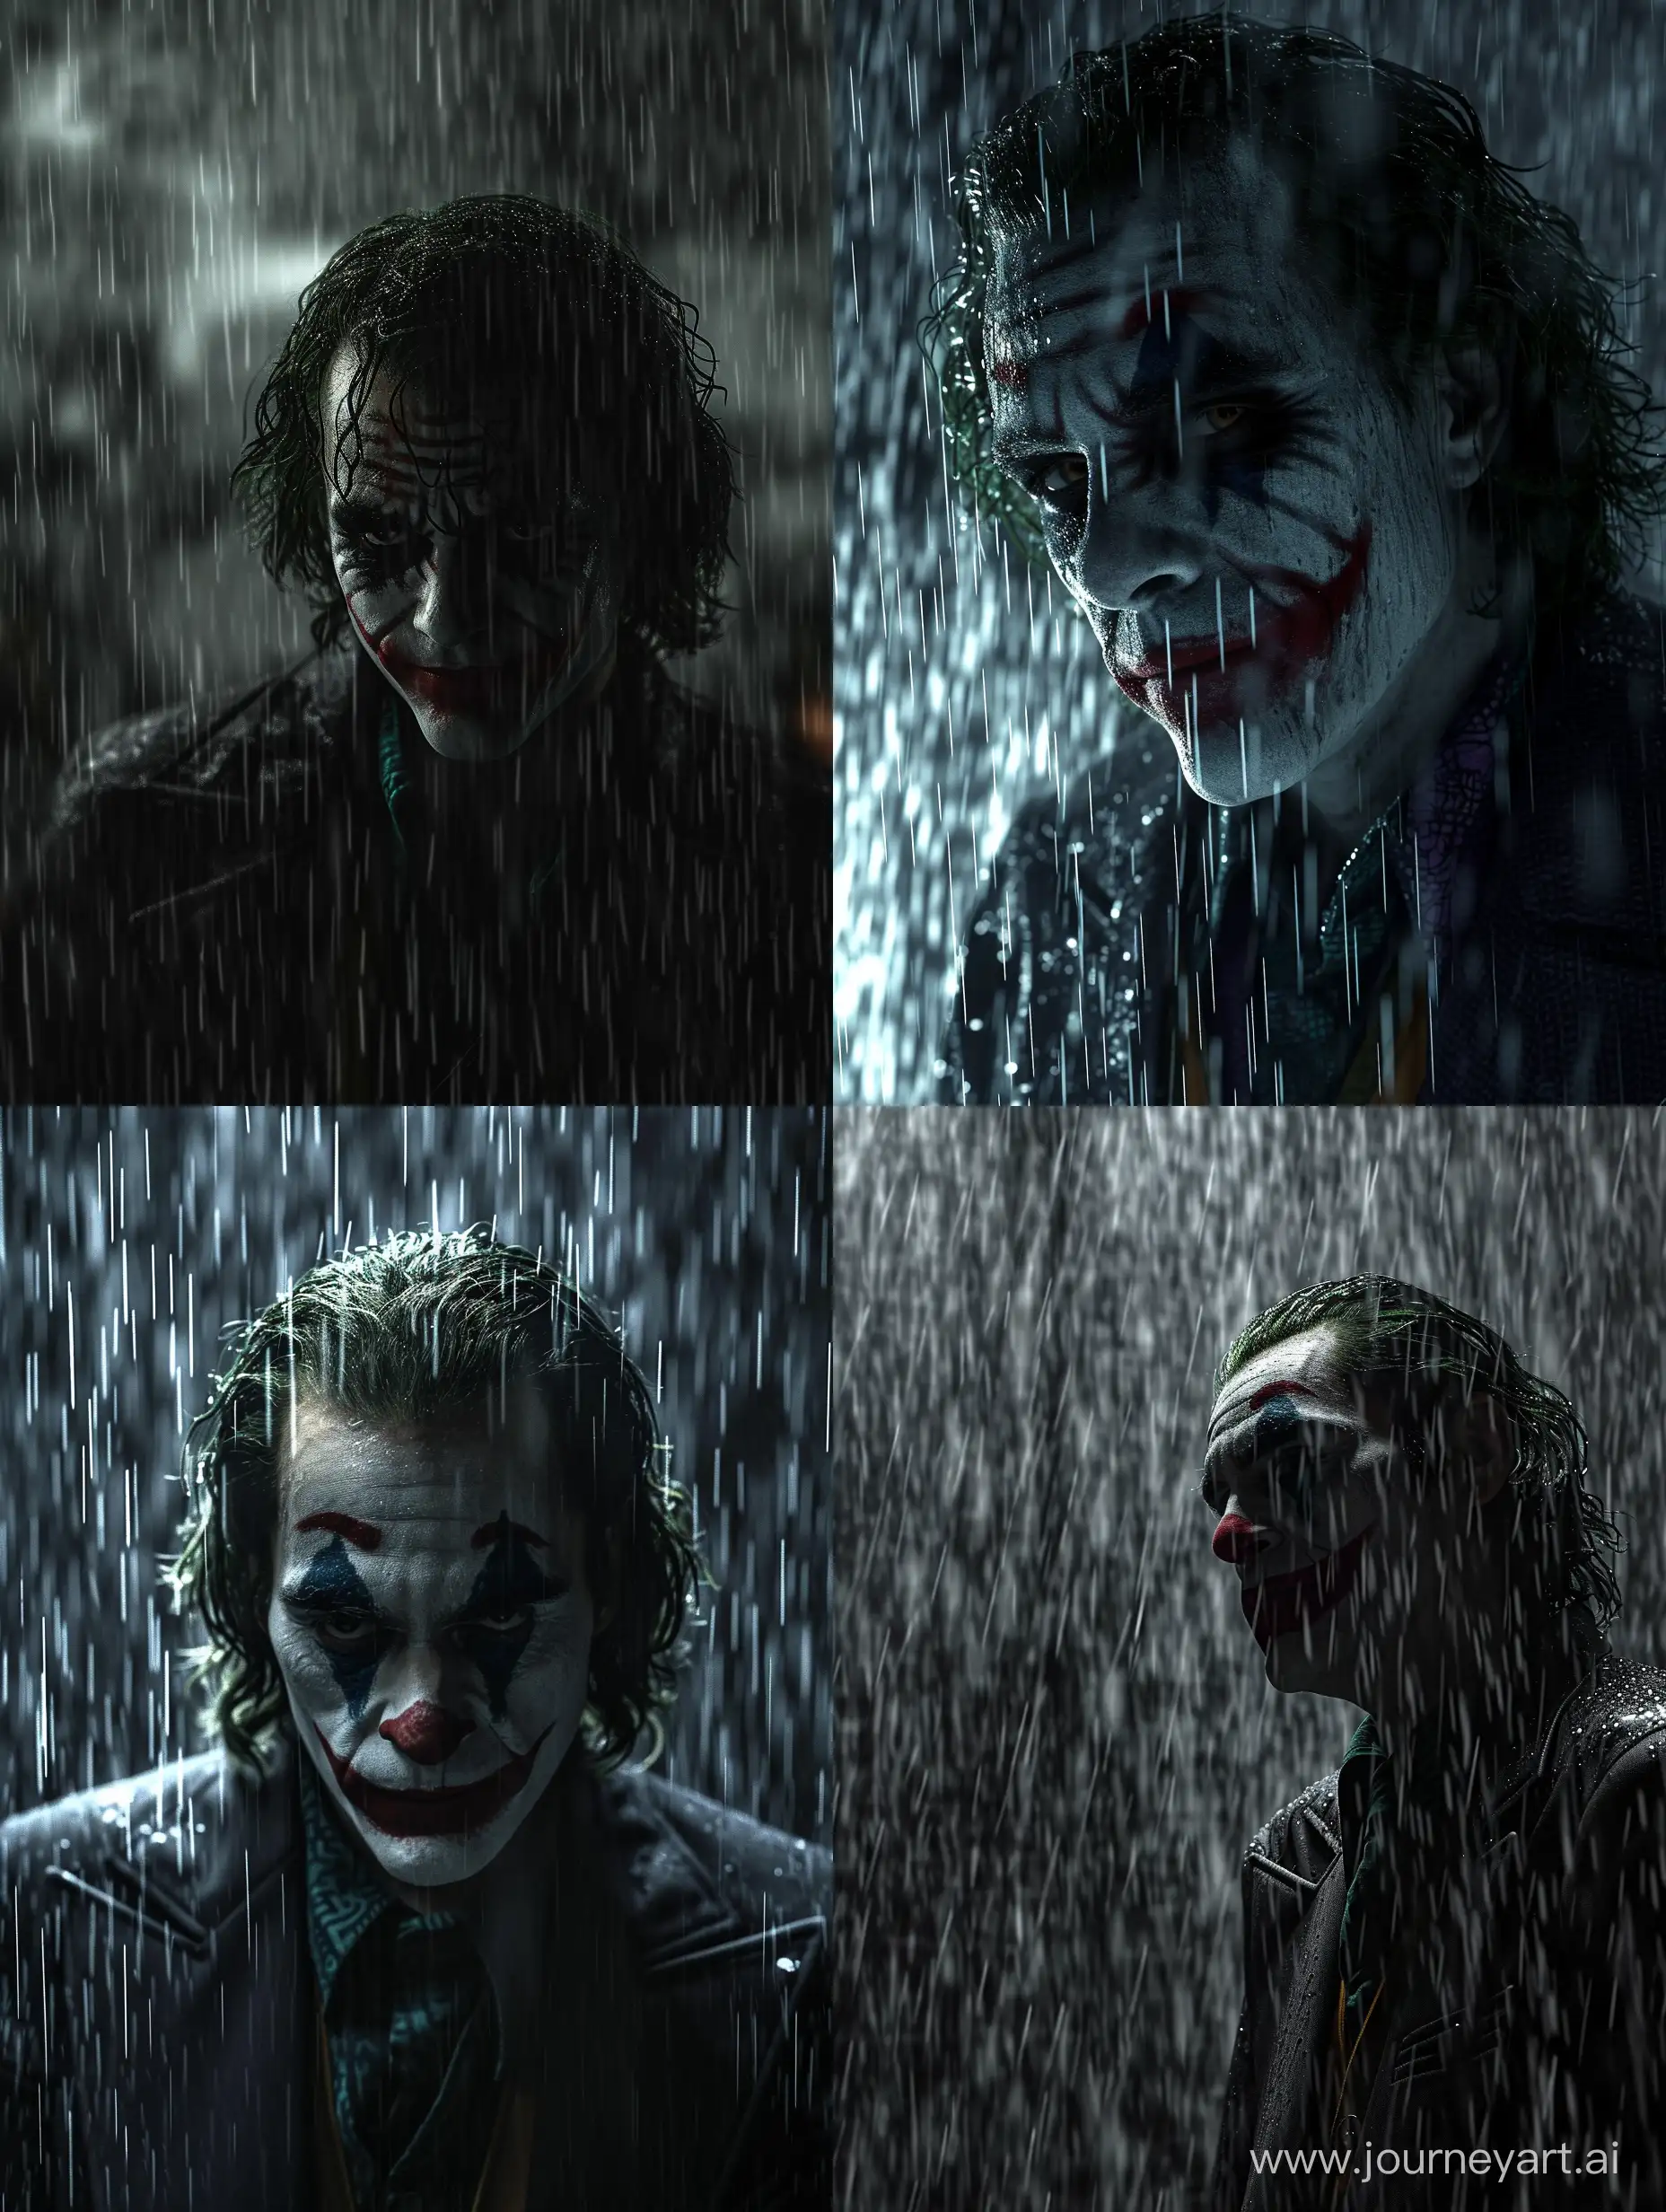 Heath-Ledgers-Joker-Stands-Alone-in-Cinematic-Rain-Scene-4K-UltraDetailed-Shot